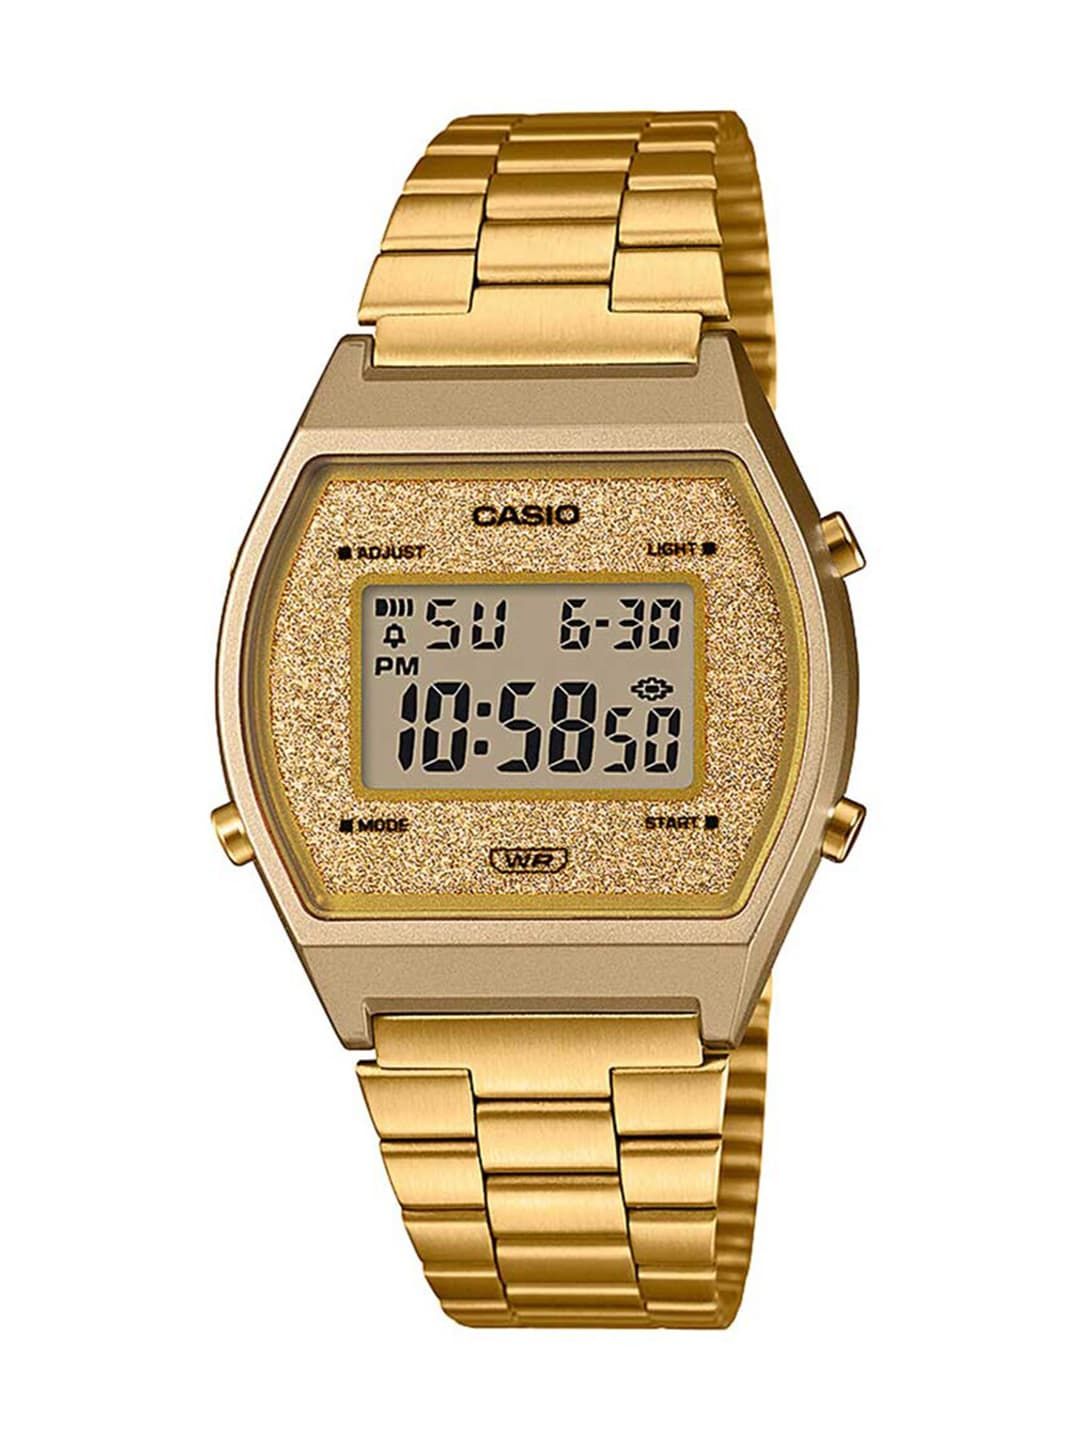 CASIO Unisex Gold-Toned Digital Watch D188 Price in India